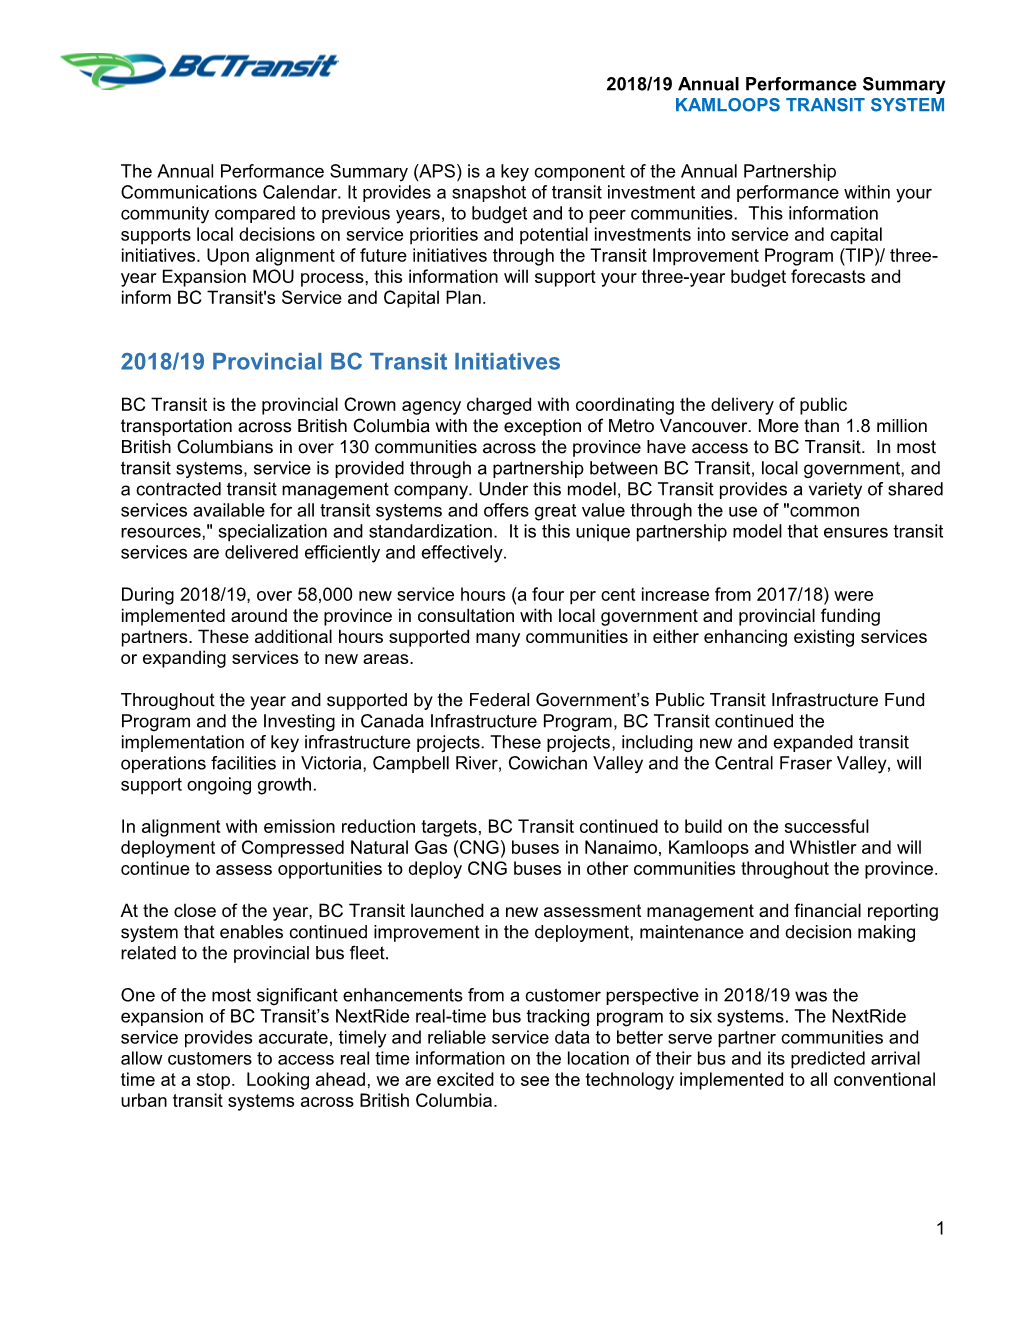 2018/19 Provincial BC Transit Initiatives